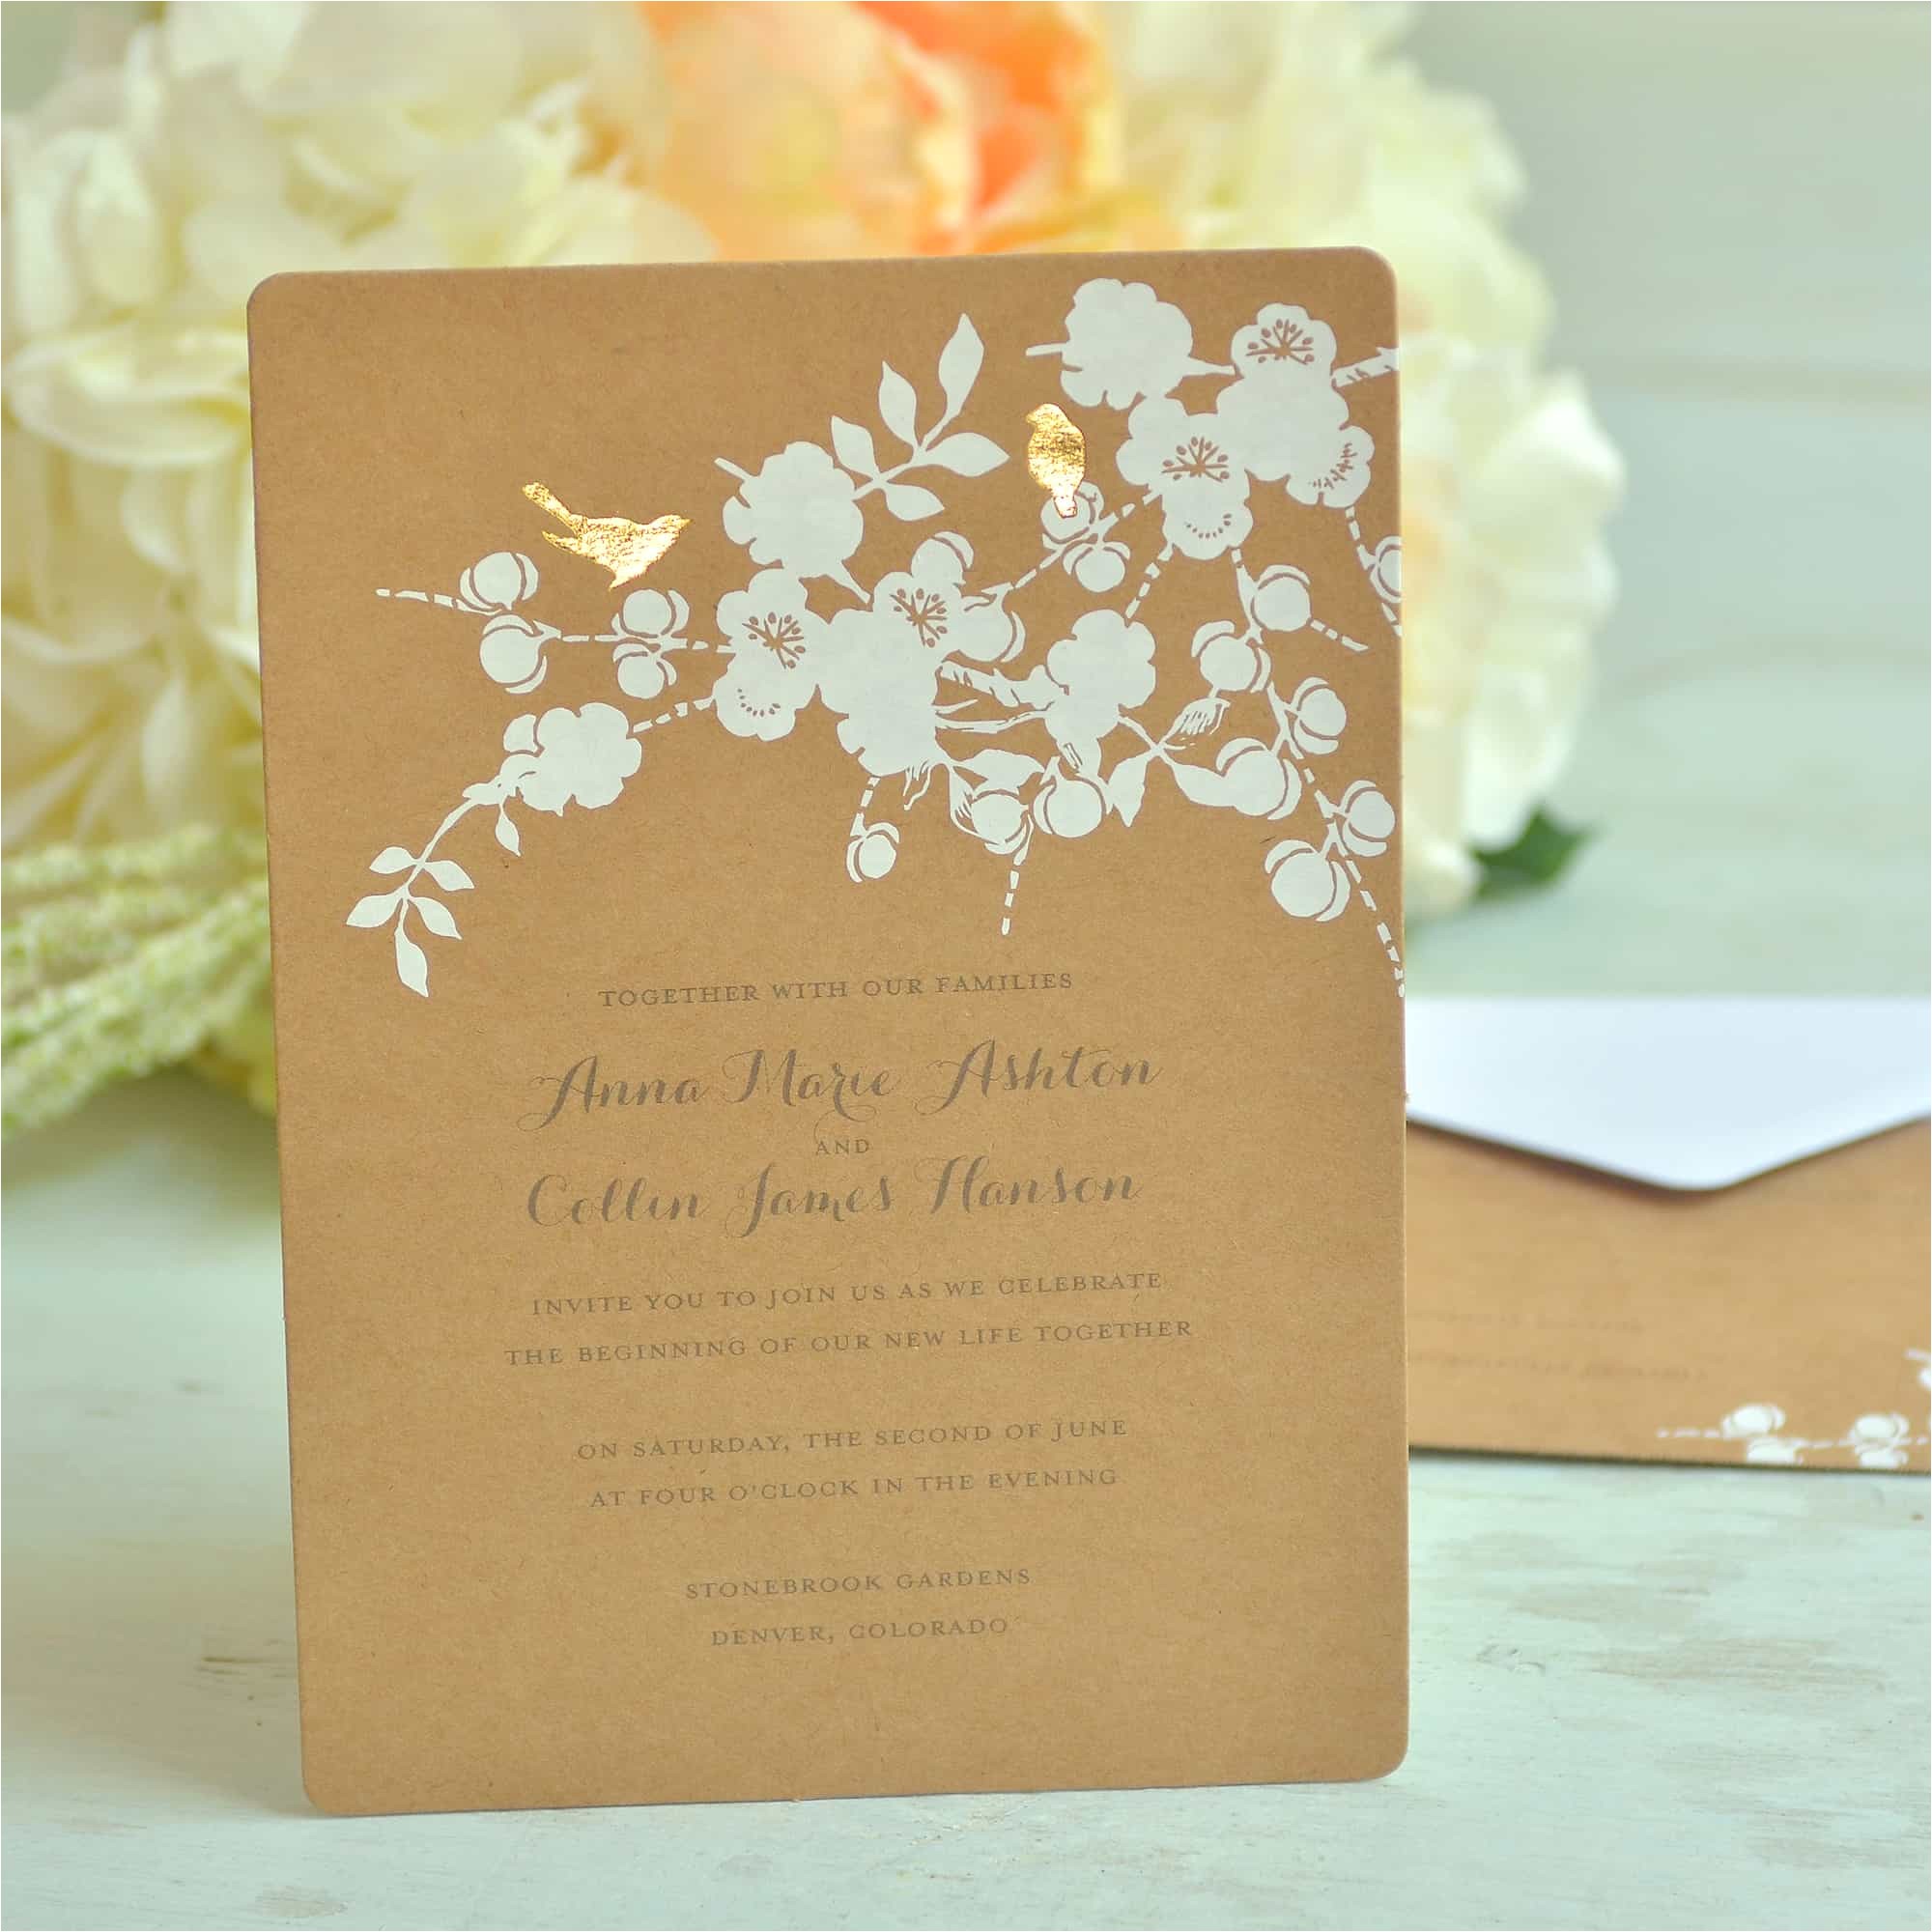 the walmart wedding invitations templates